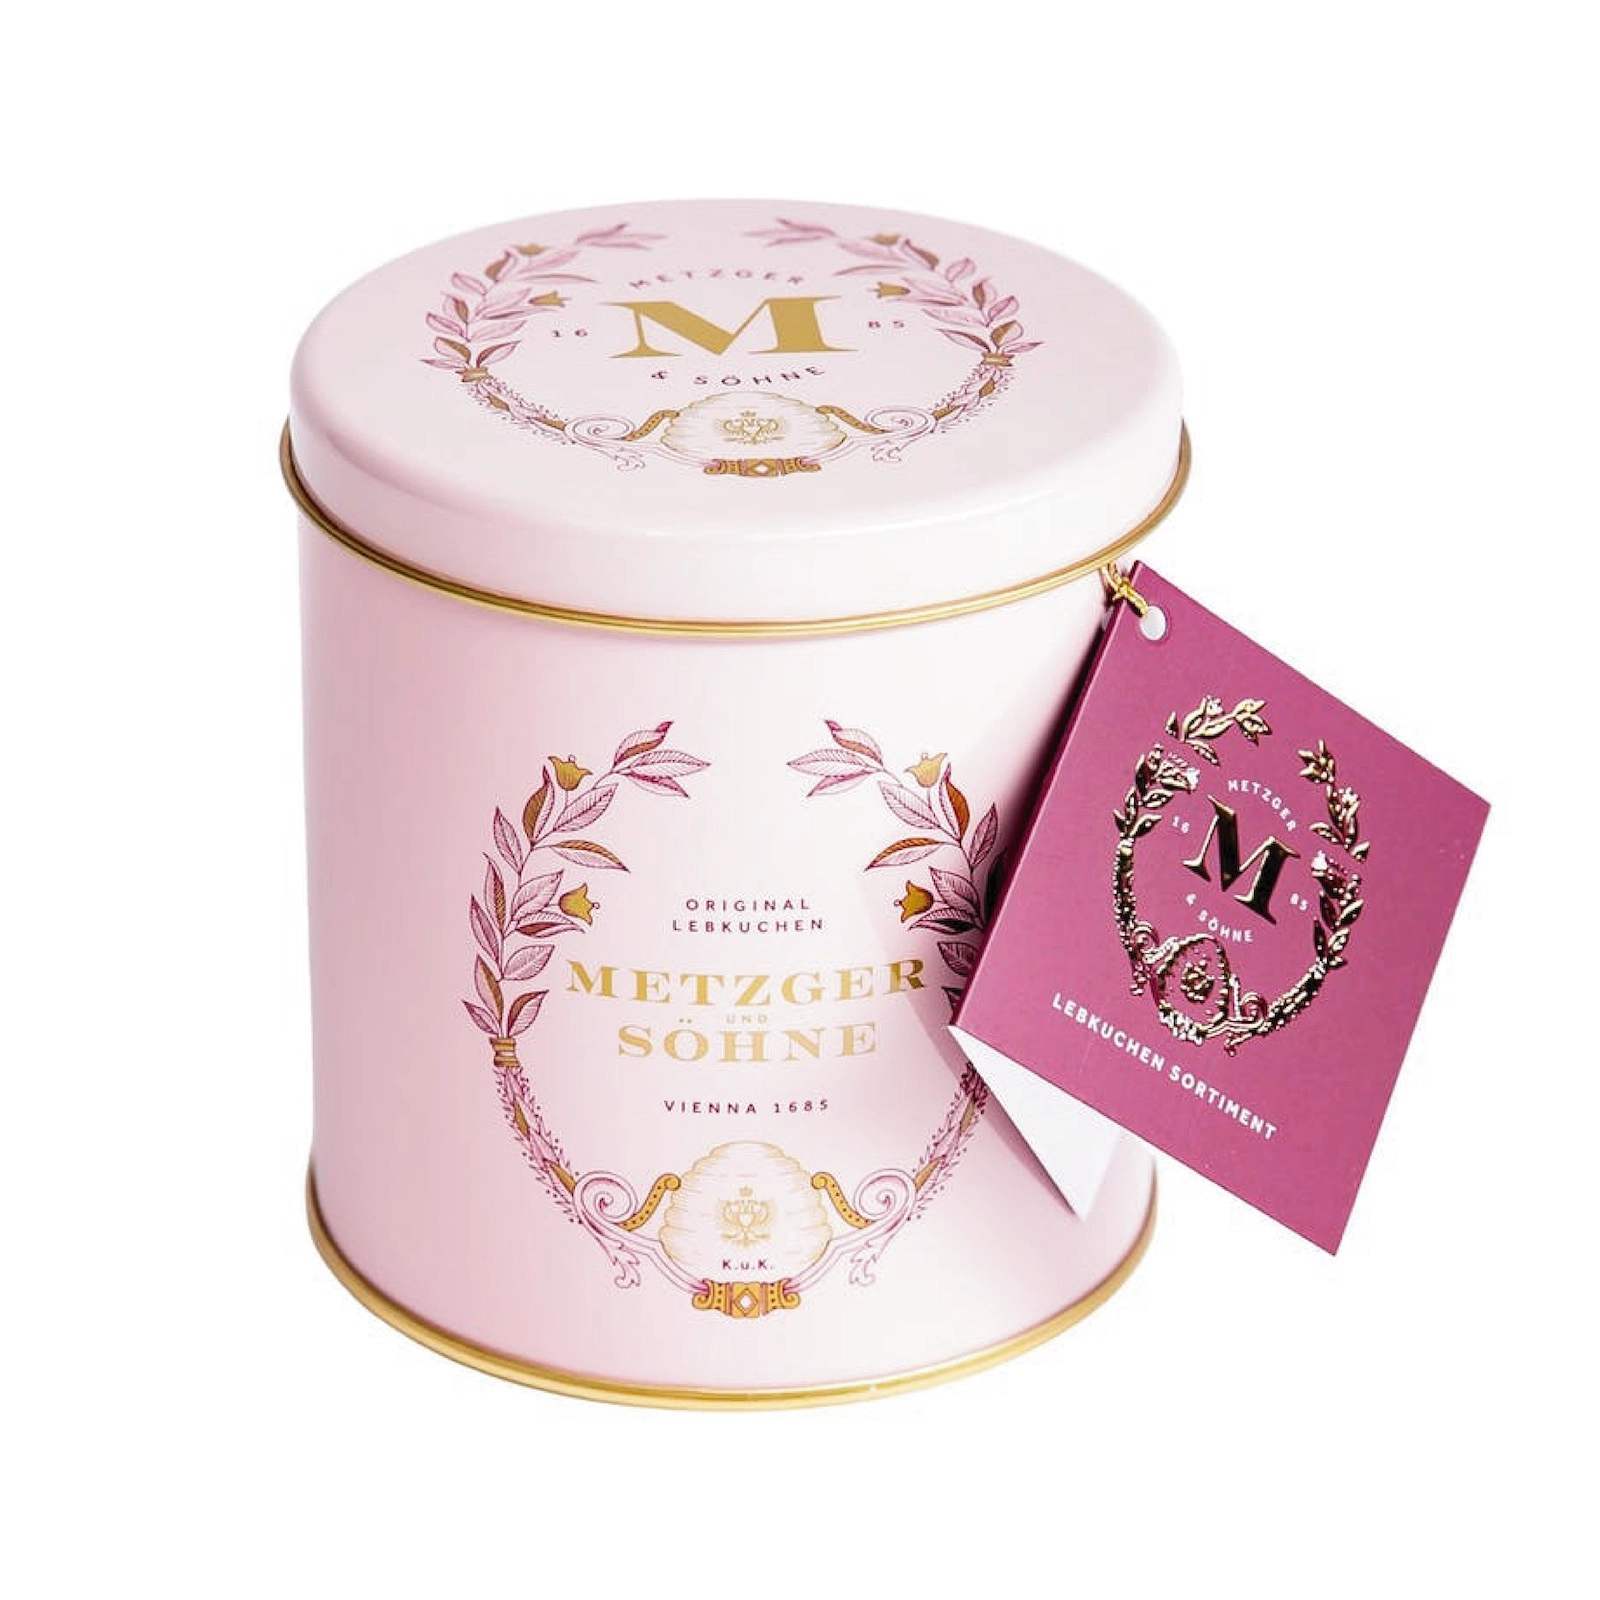 Piccola Lebkuchen - Selectie de praline și turtă dulce în cutie metalica roz, Metzger und Sohne, 250 g [1]